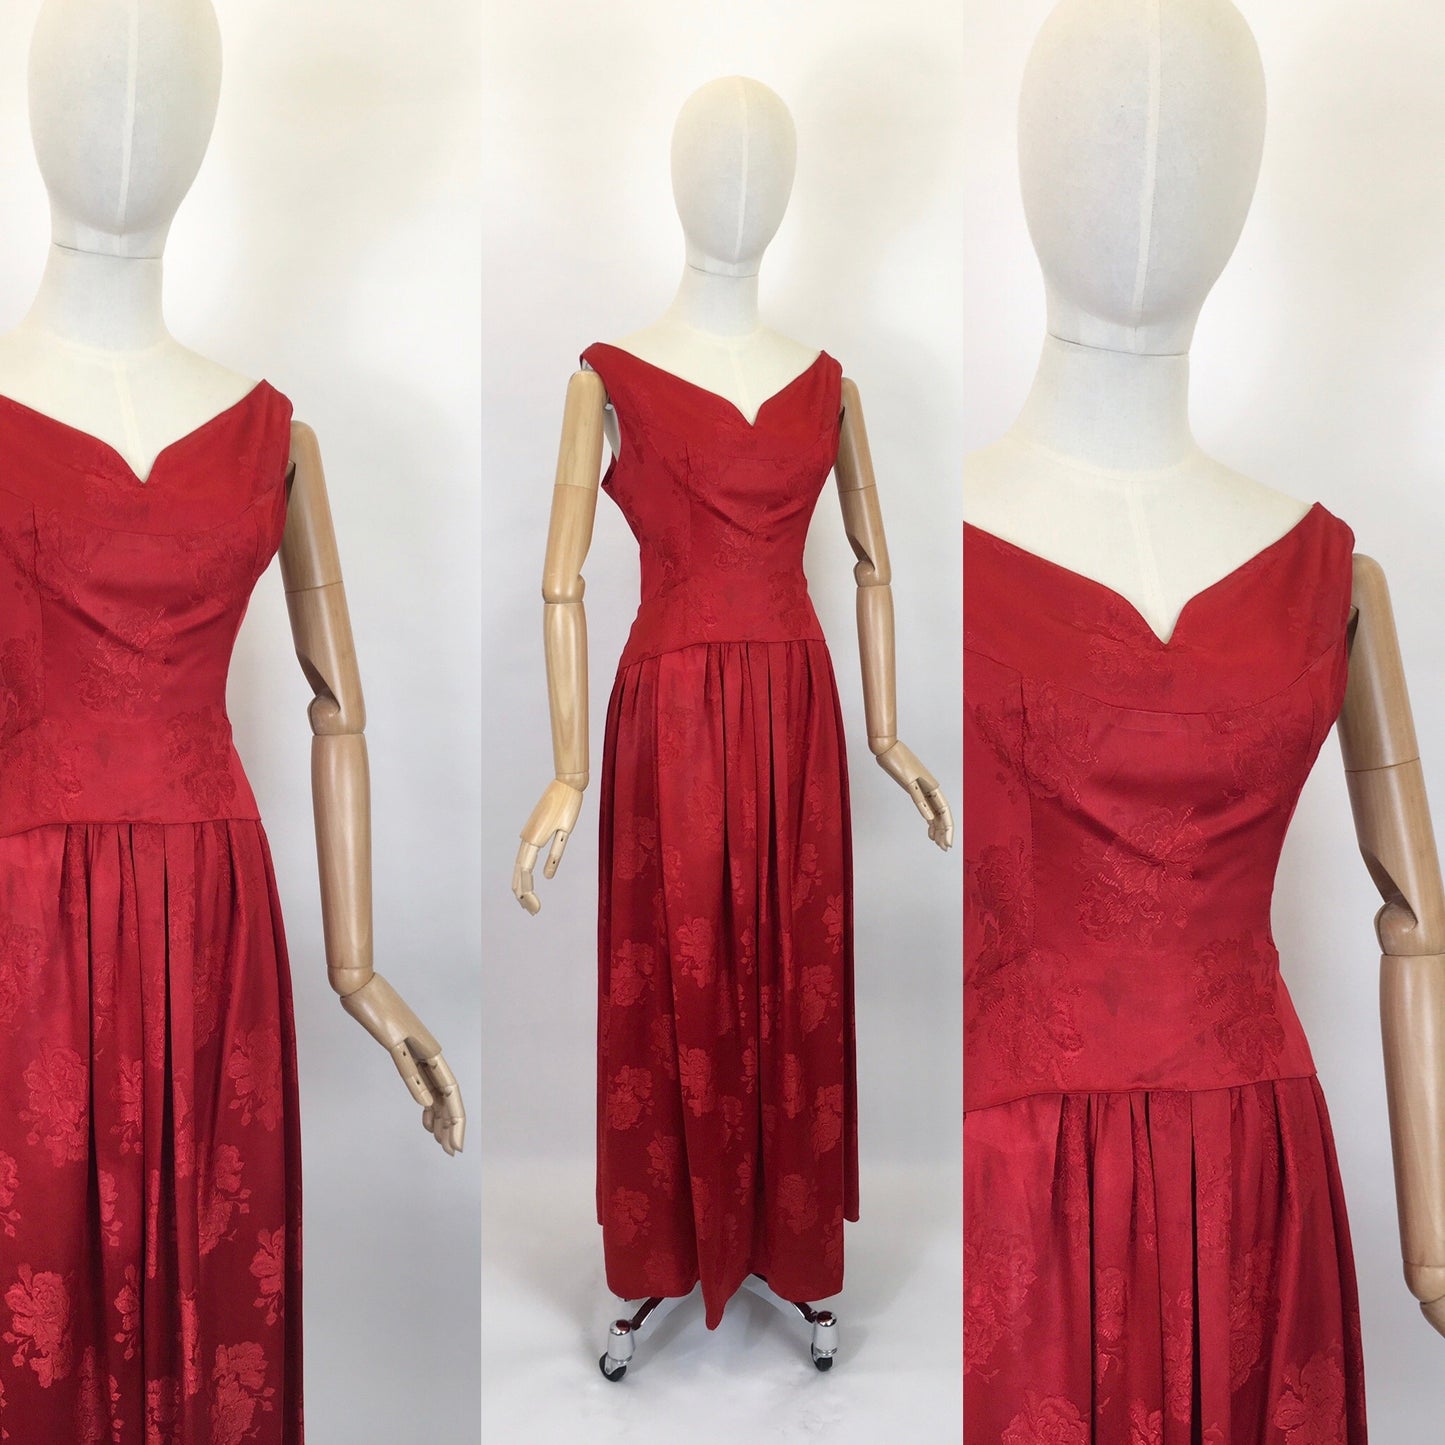 Original Late 1940’s Evening Dress - In A Lipstick Red Silk Floral Brocade